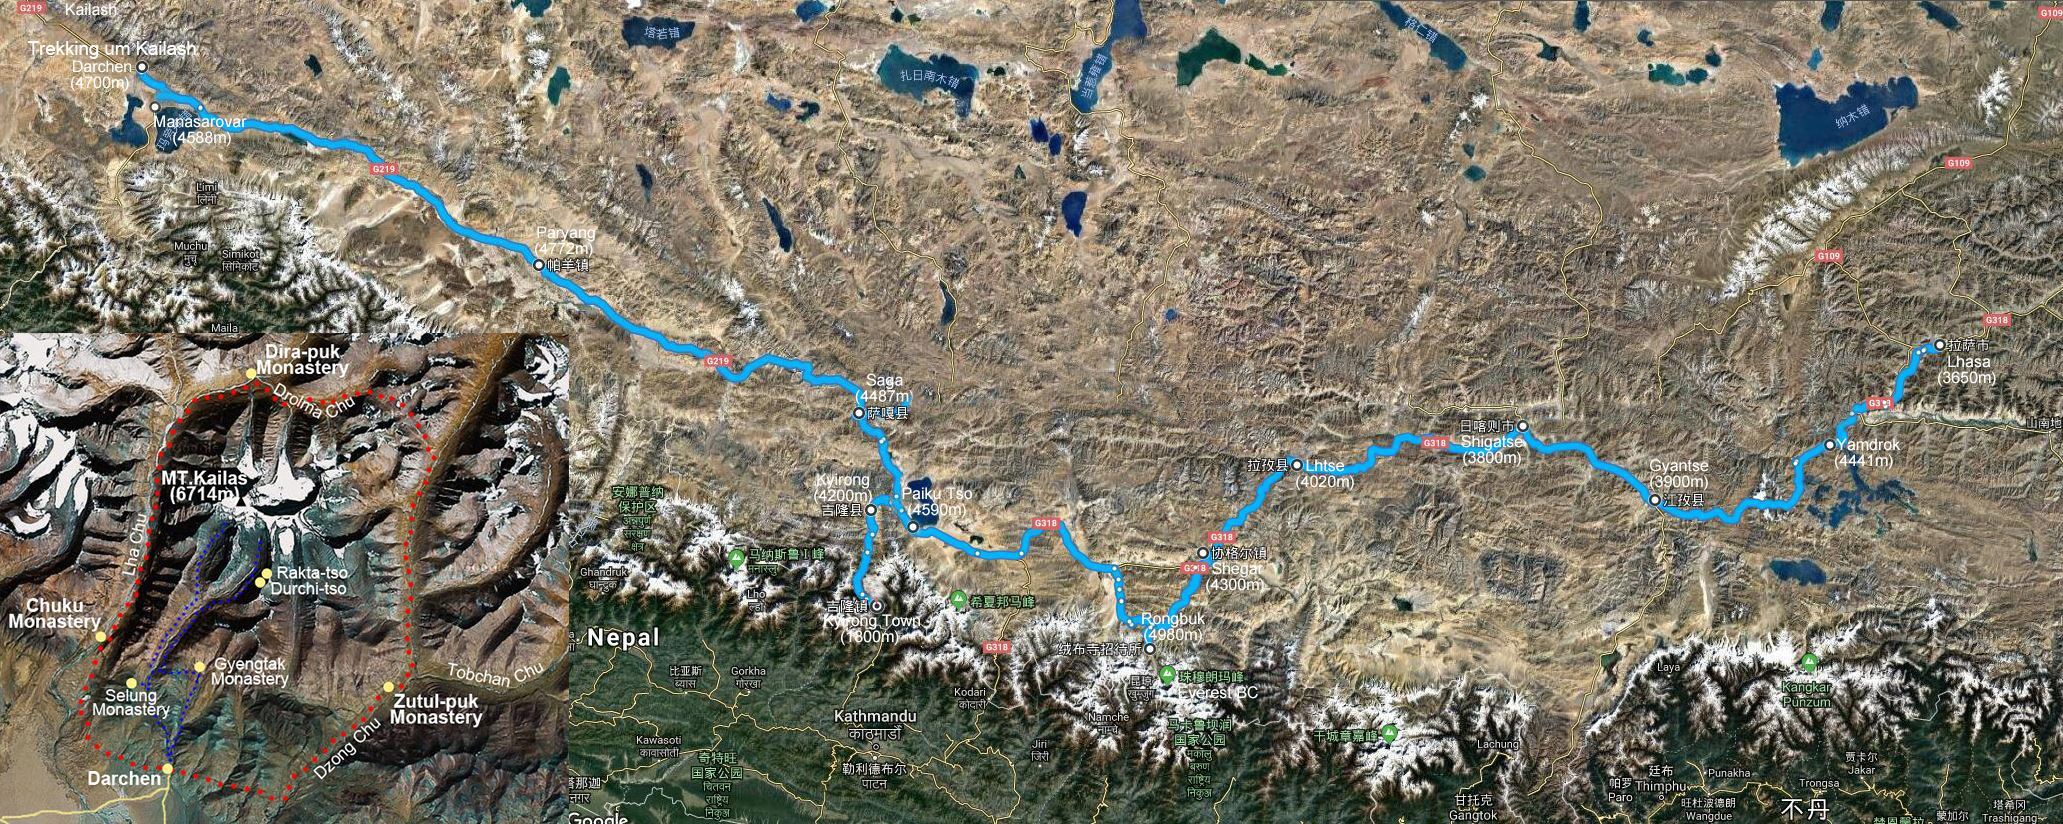 Viaggio Terrestre da Lhasa a Kathmandu con Everest ed Escursionismo a Kailash